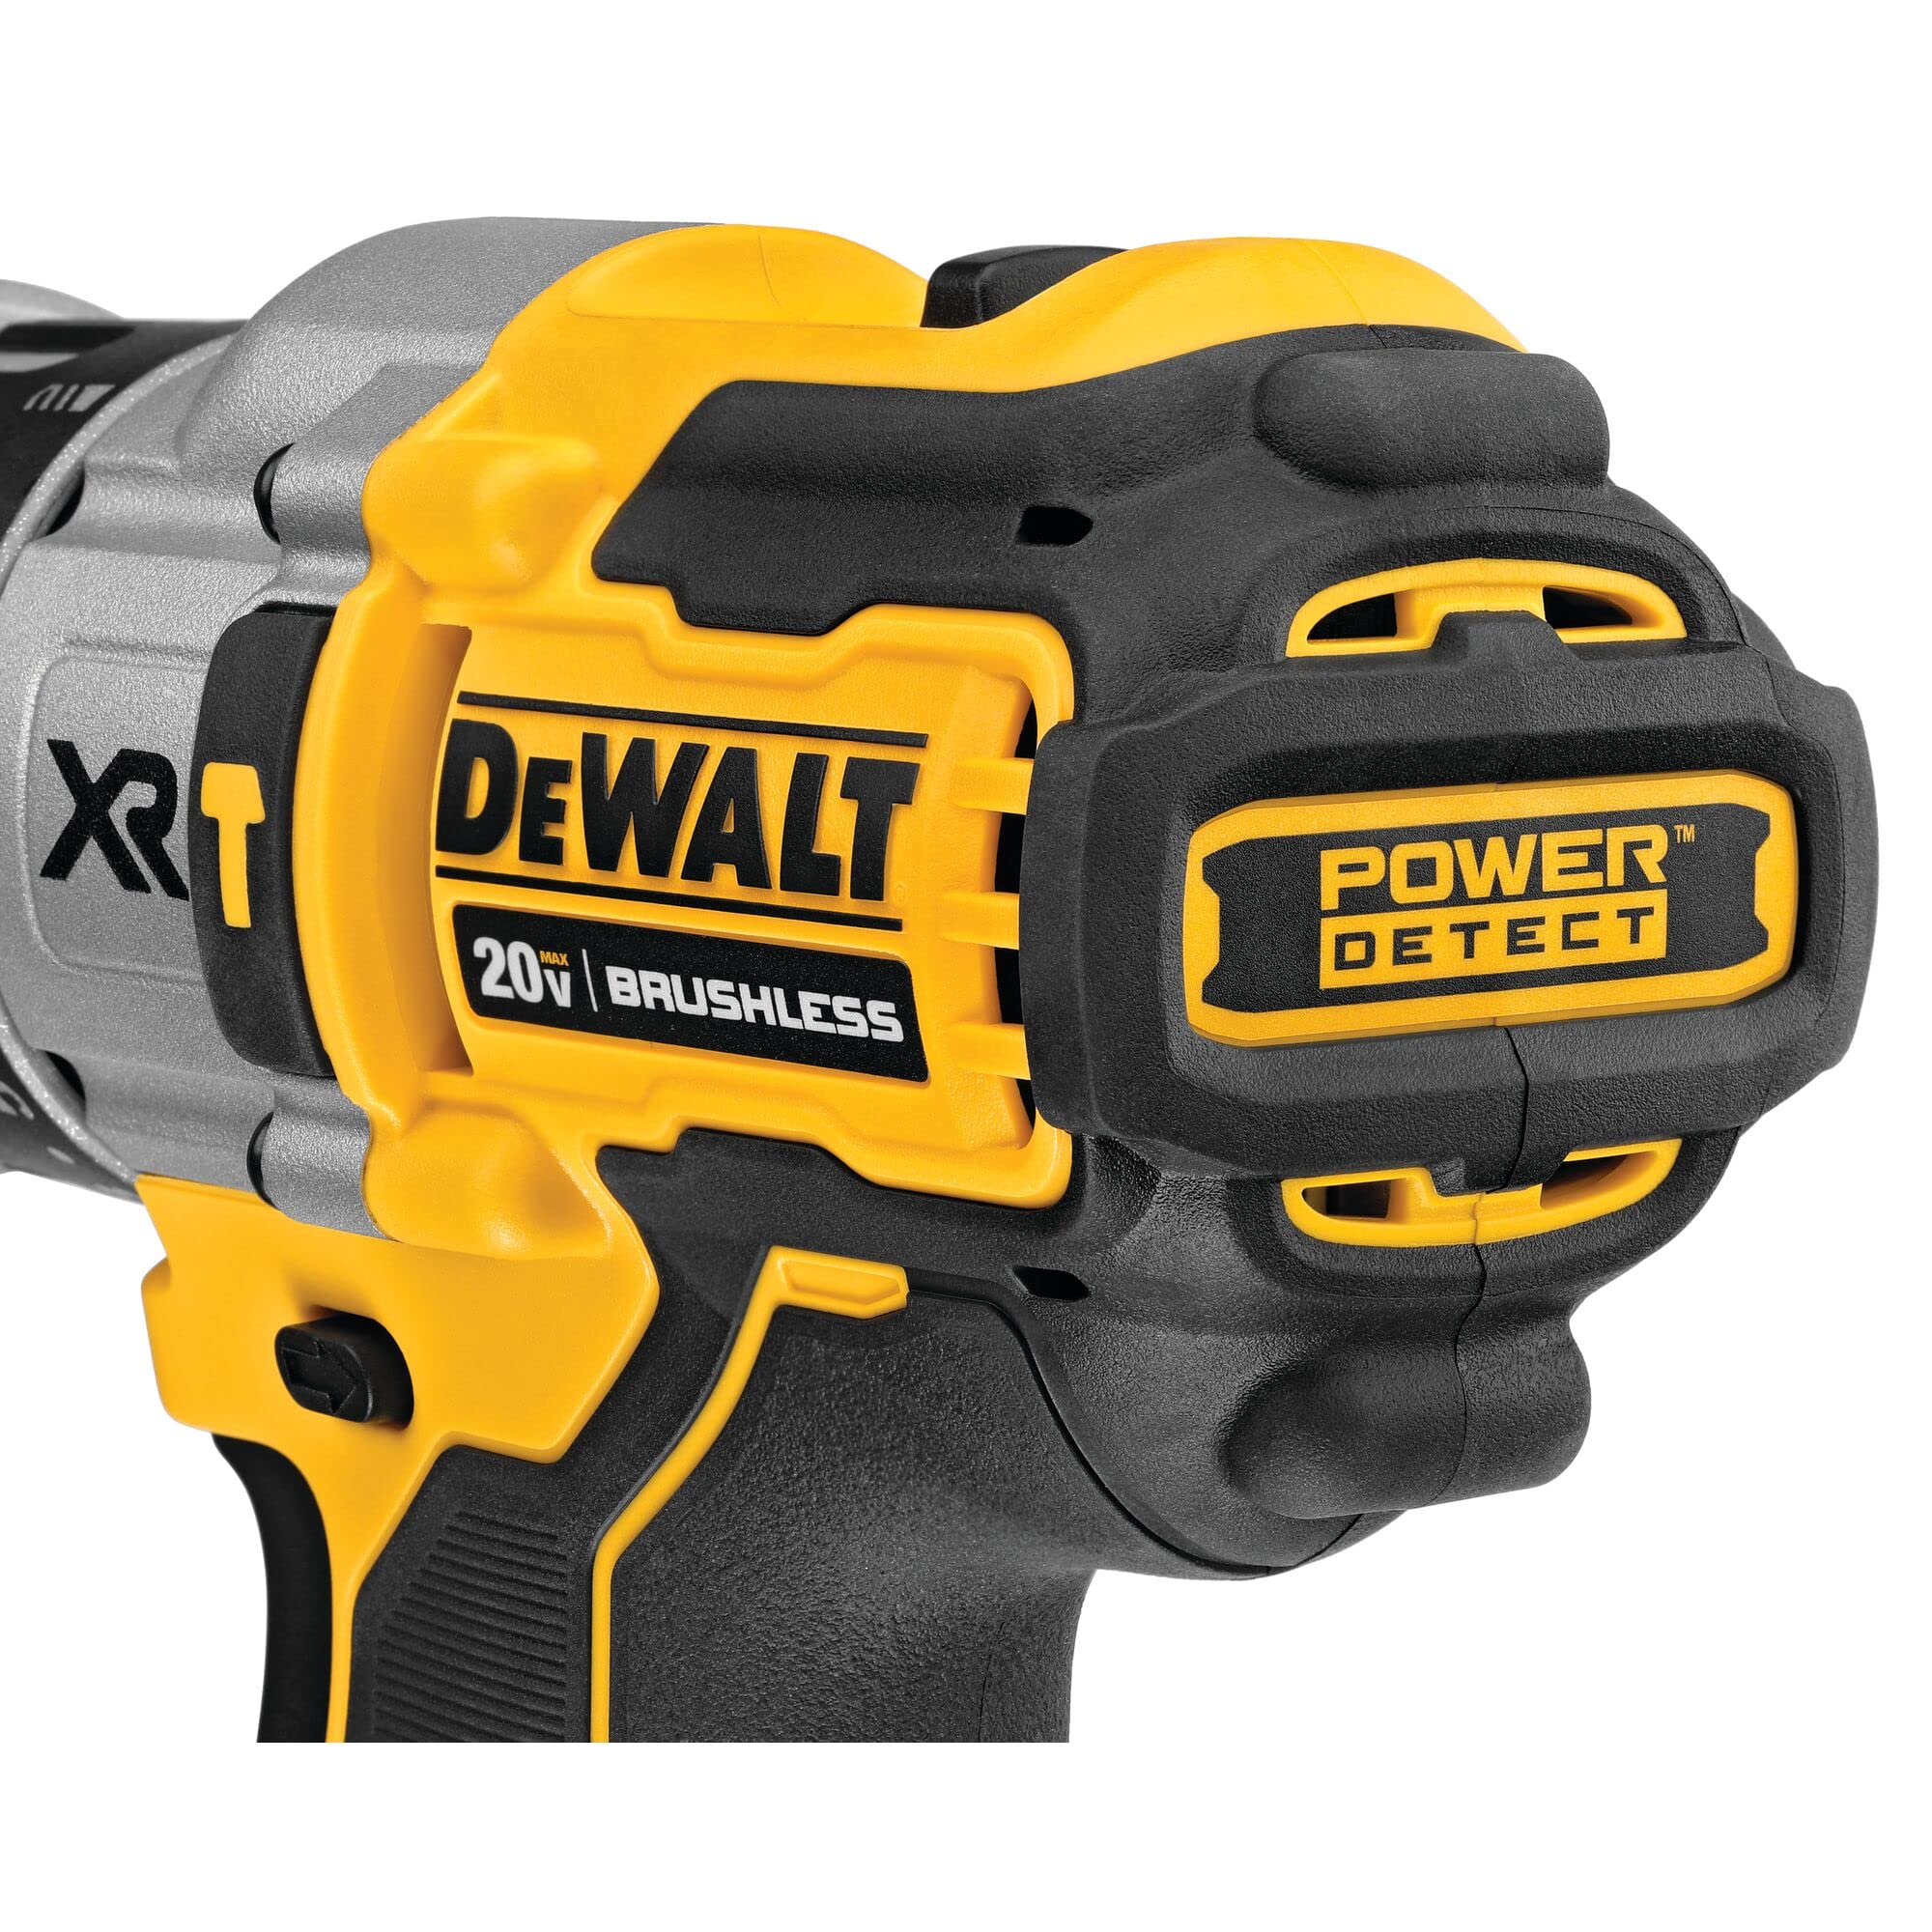 DEWALT 20V MAX XR Cordless Hammer Drill, Power Direct, Tool Only (DCD998B)